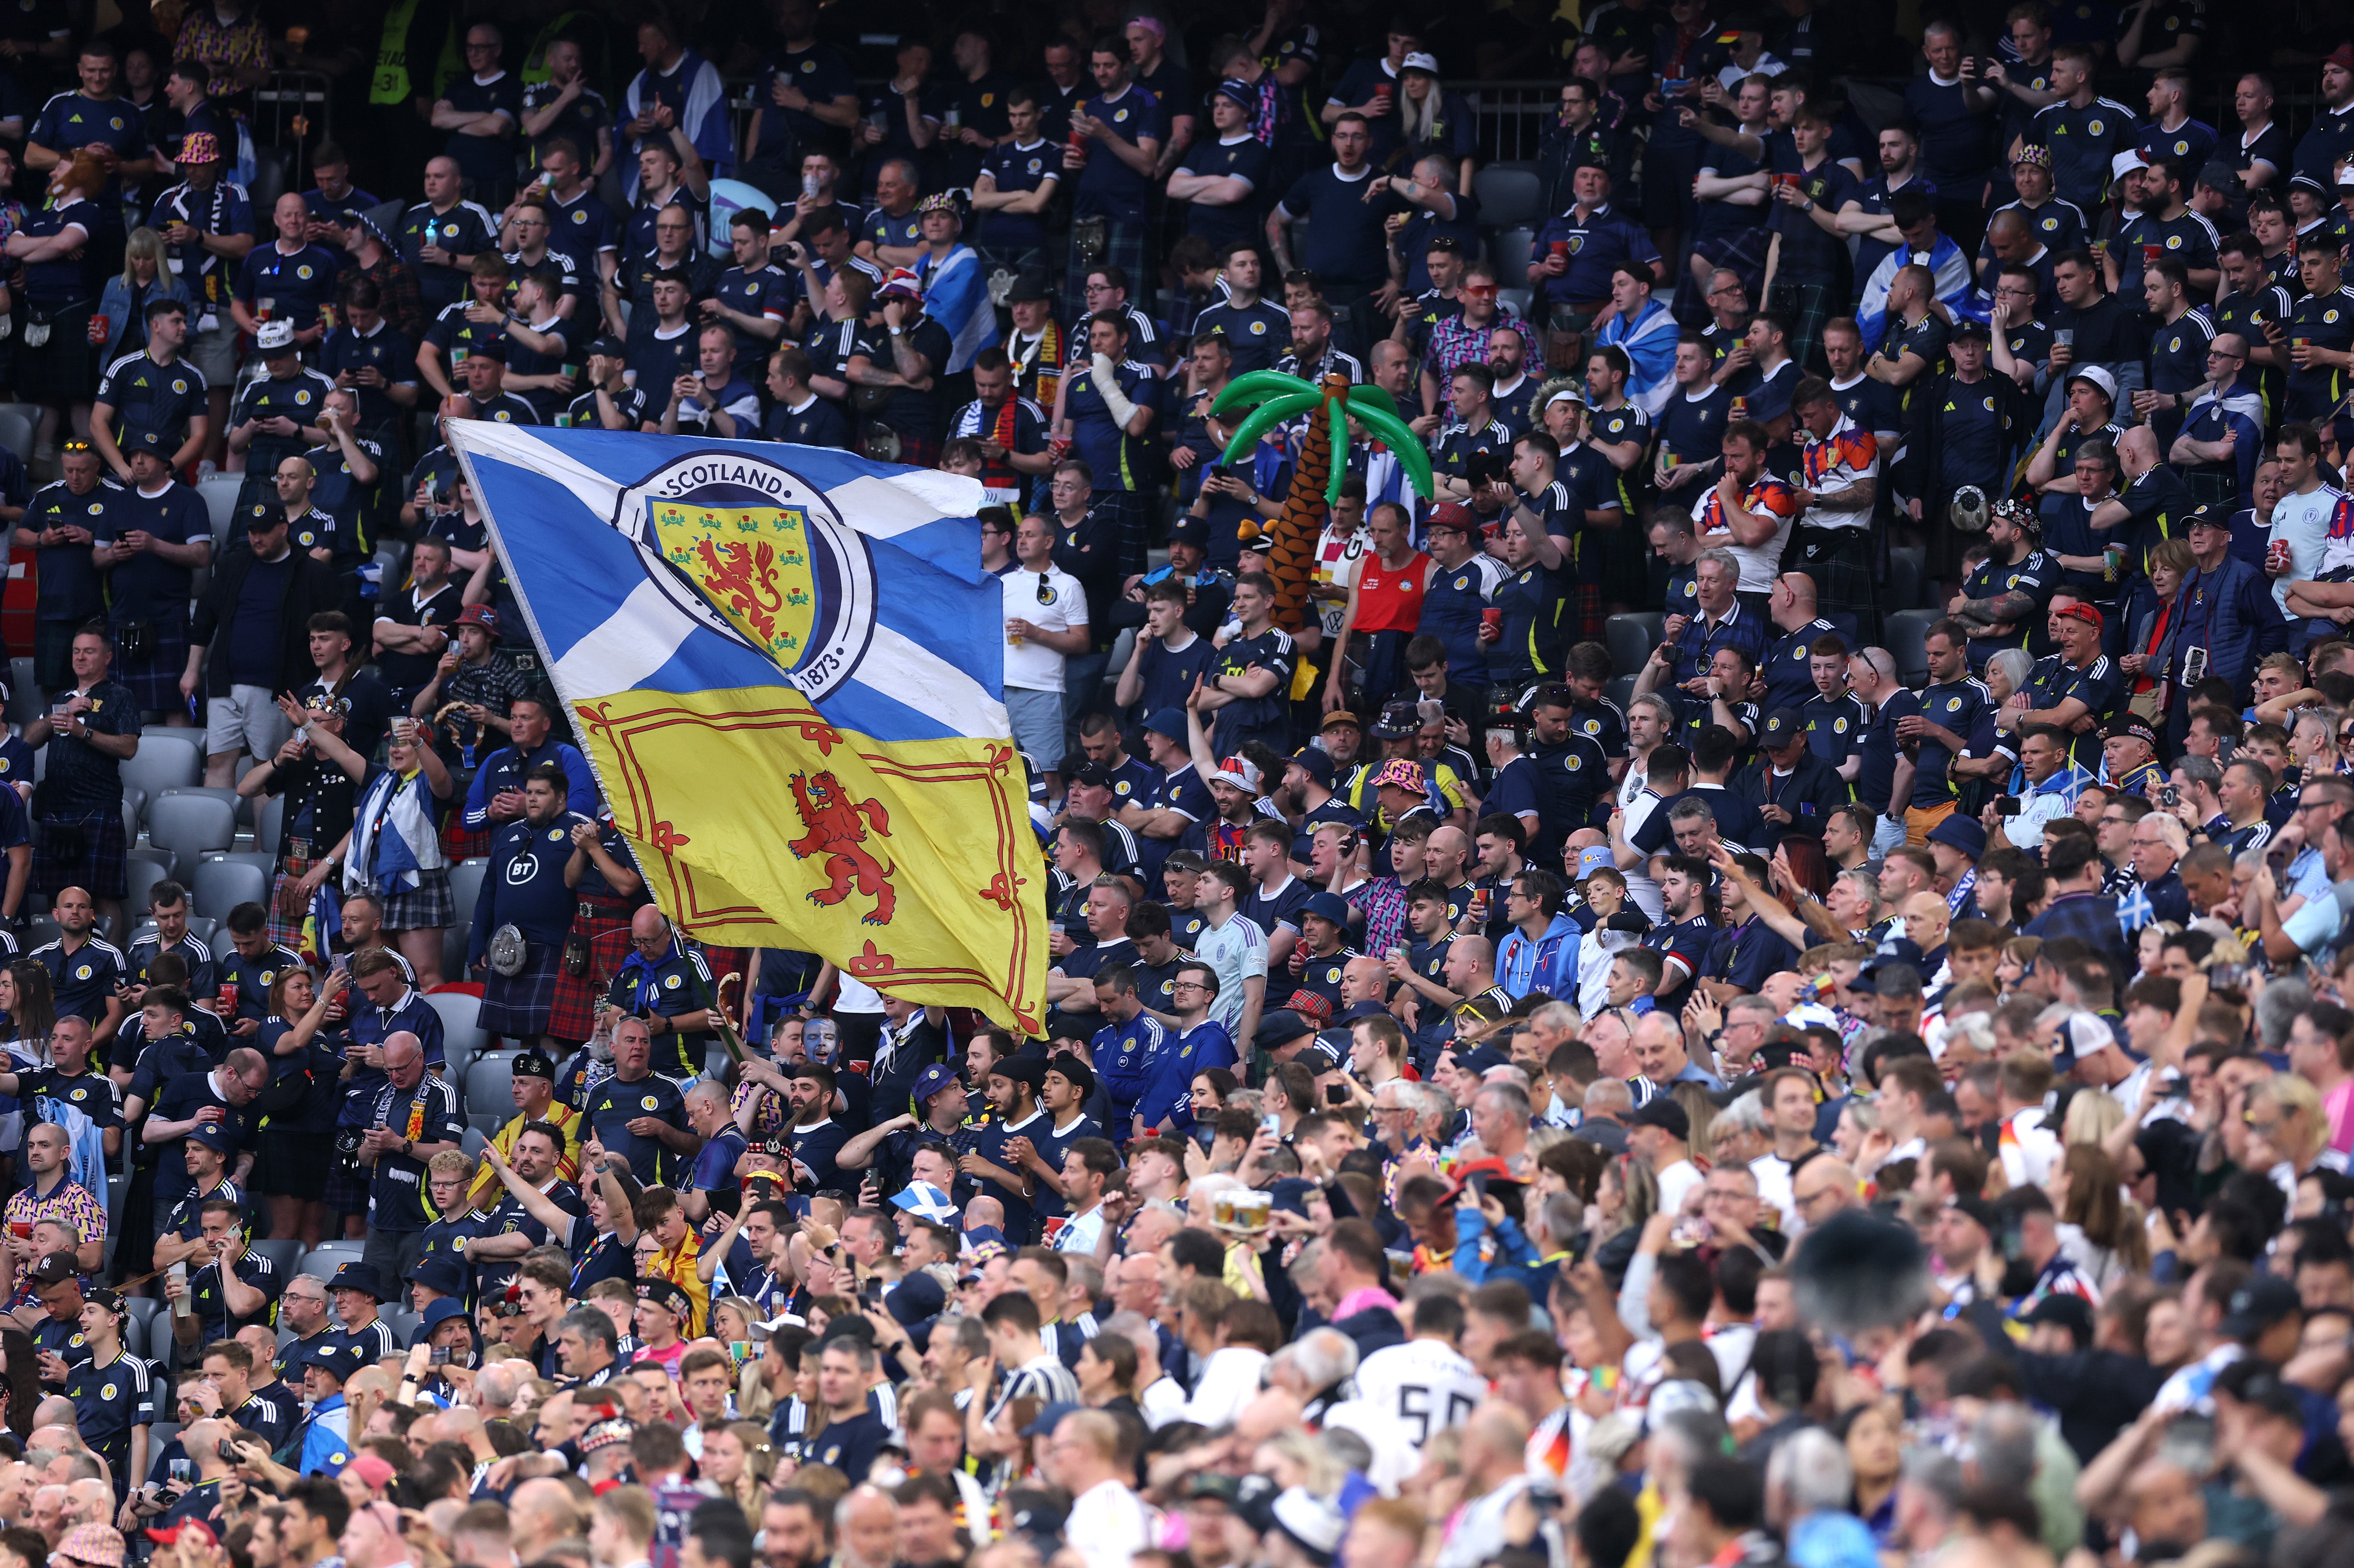 A sea of Scottish fans inside Munich’s Allianz Arena